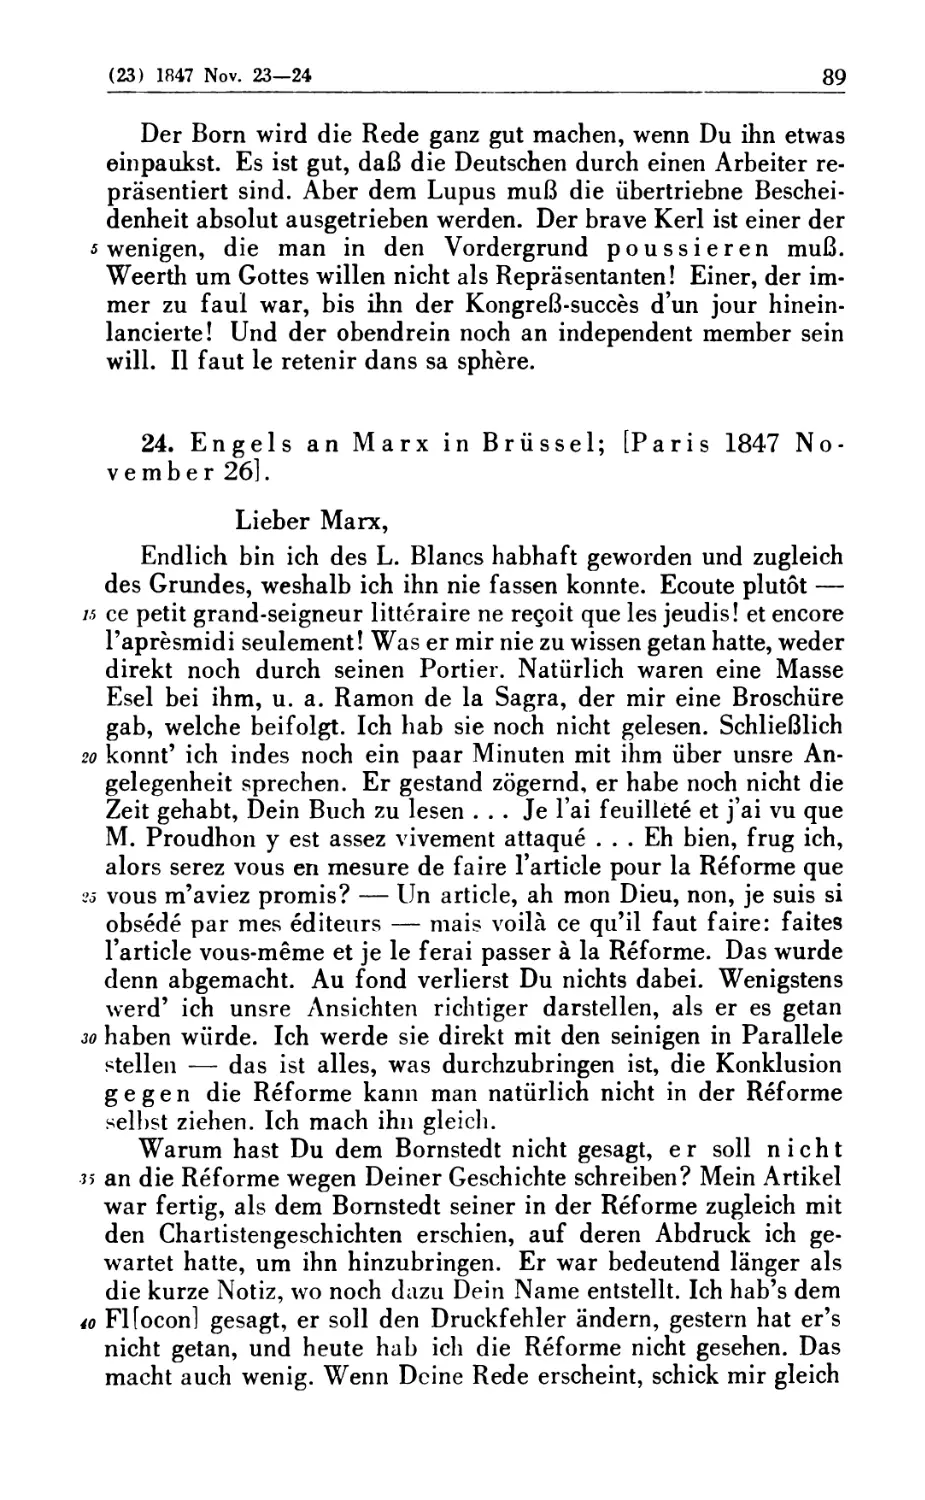 24. Engels an Marx in Brüssel: [Paris 1847 November 26]